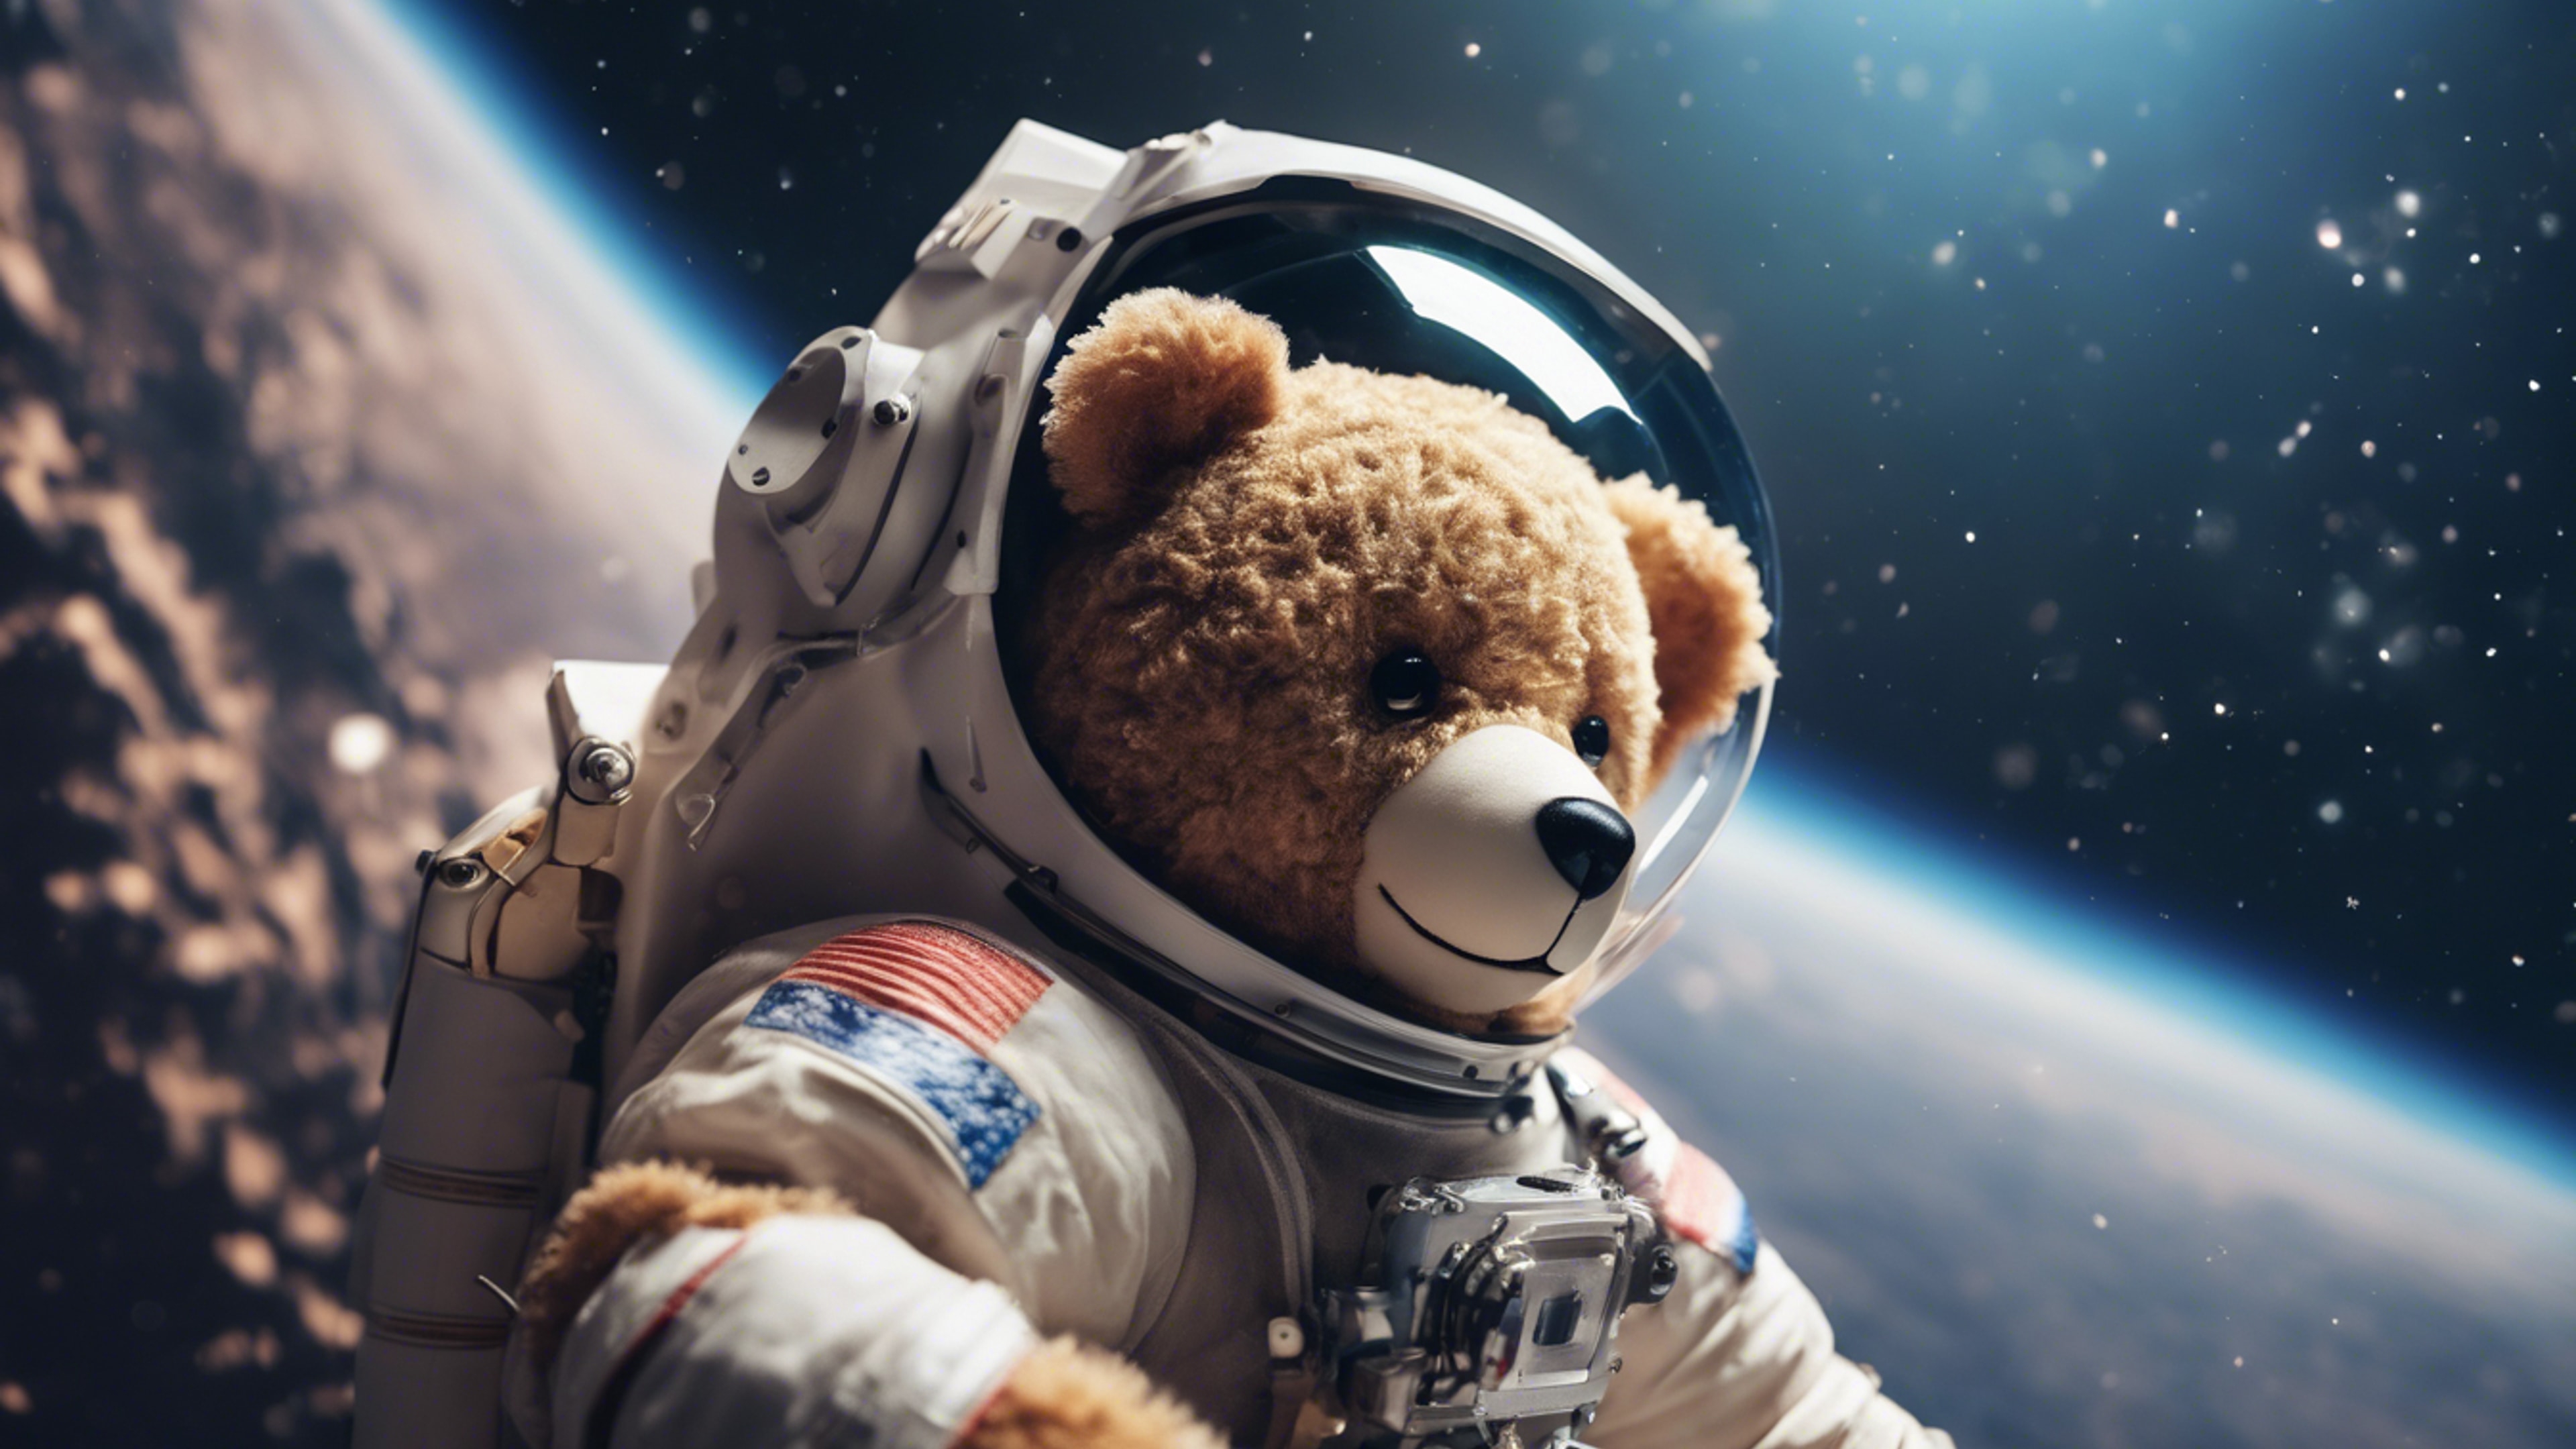 A teddy bear astronaut floating in space. Tapeta[264e253f630141468c44]